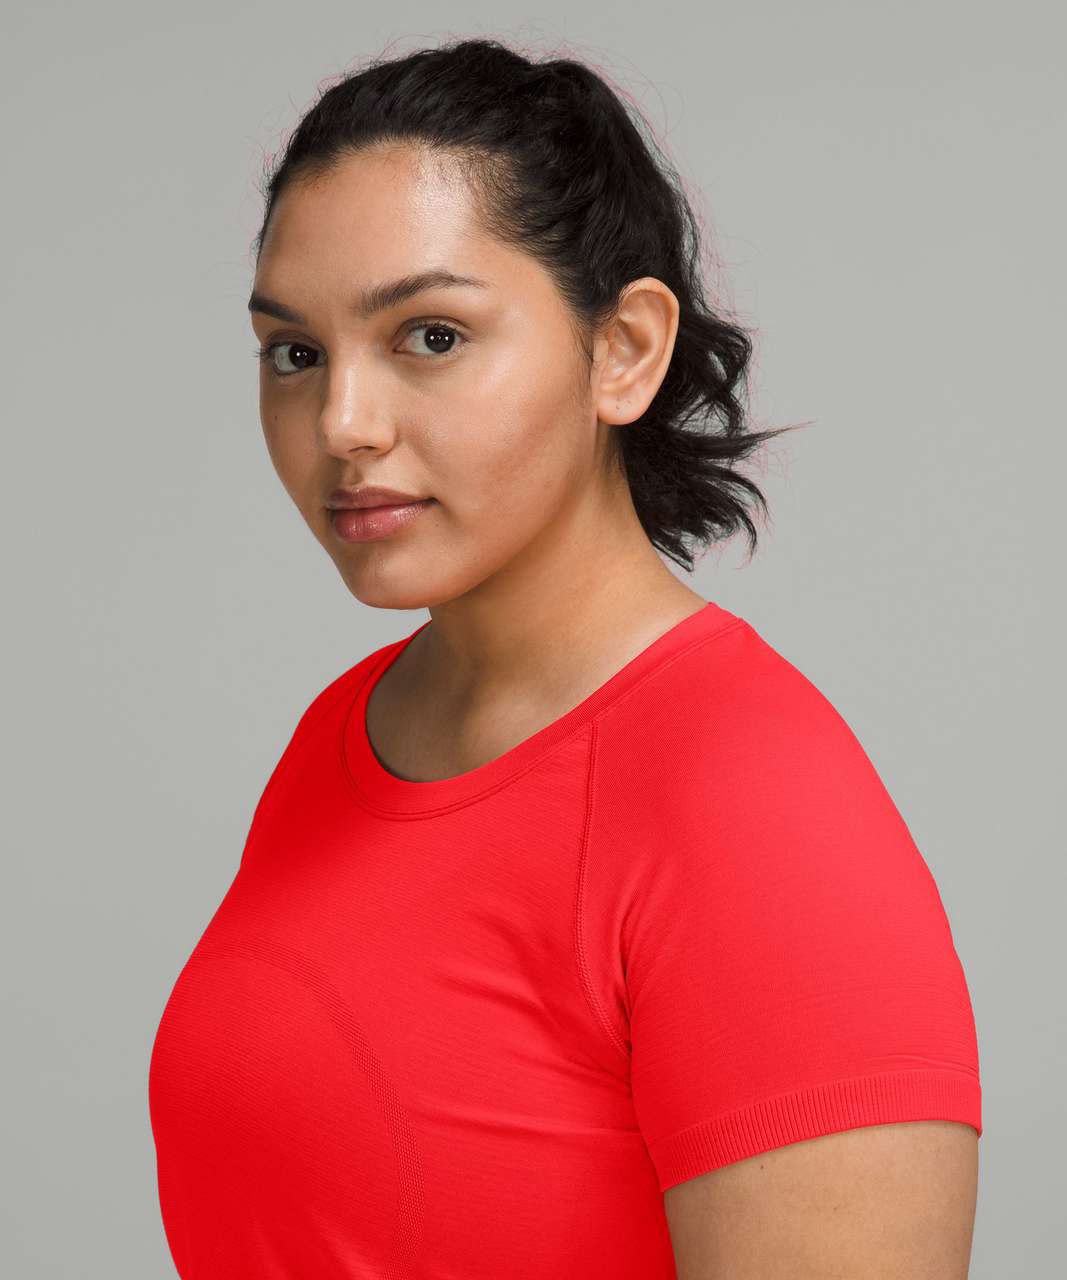 Lululemon Swiftly Tech Short Sleeve Shirt 2.0 - Love Red / Love Red